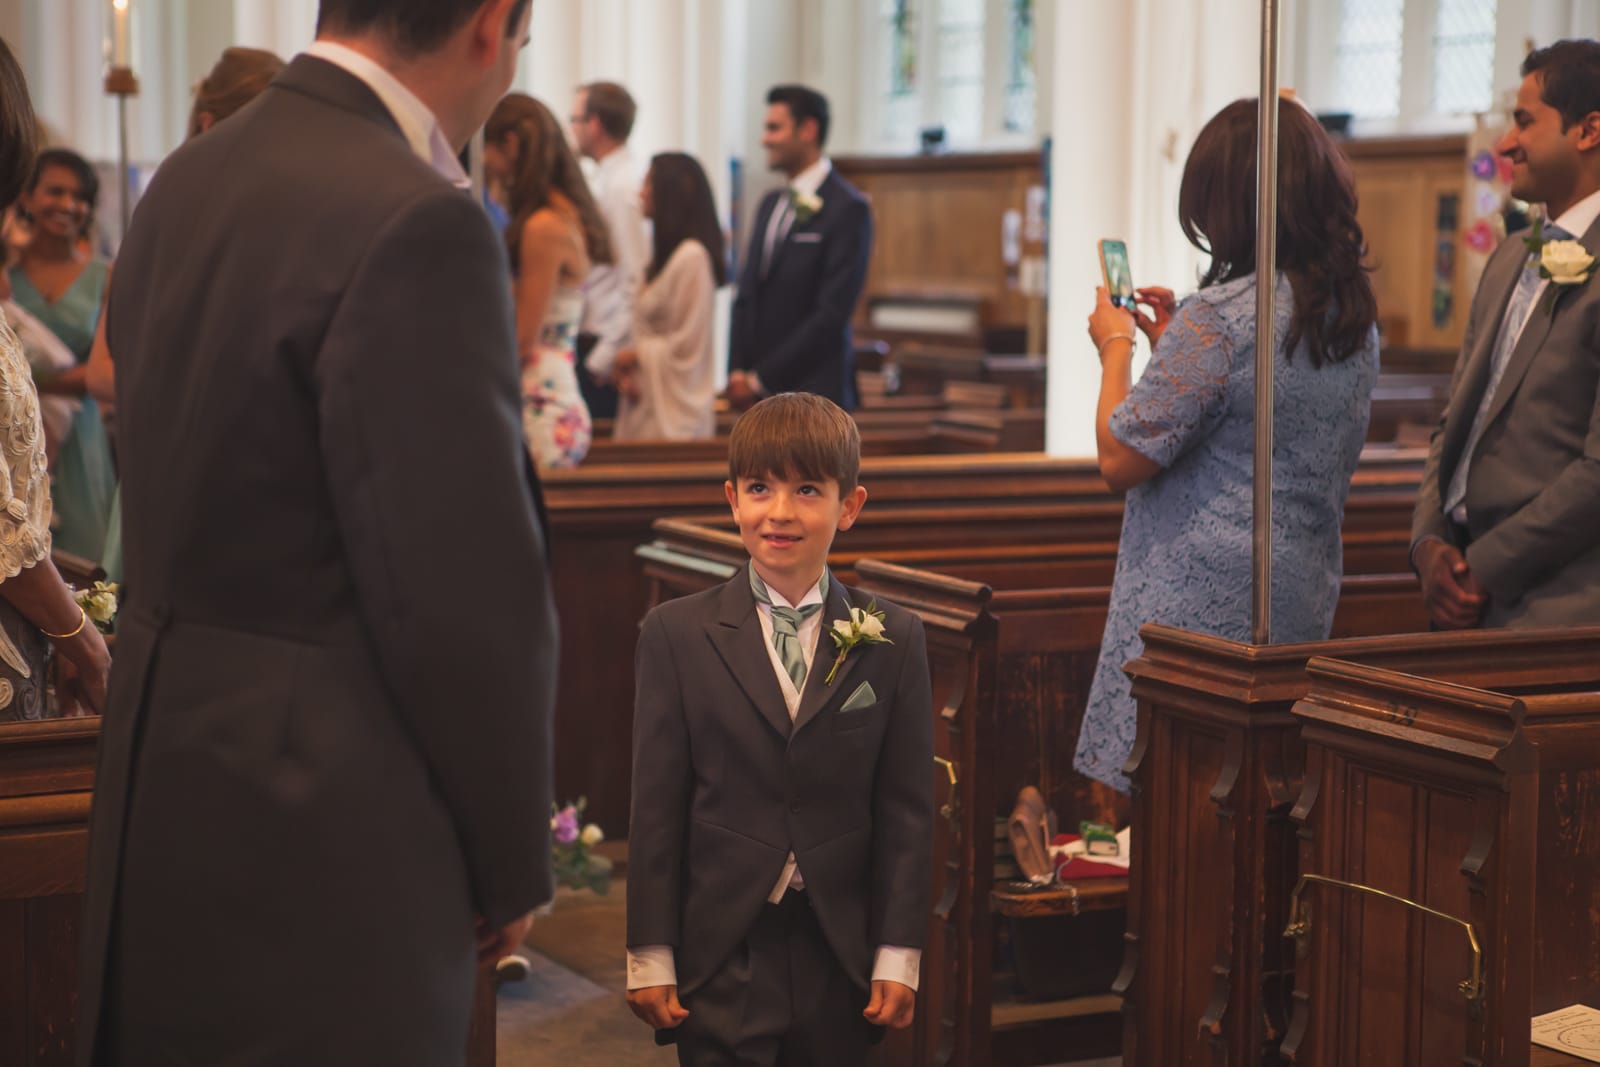 bridebook.co.uk little boy at a wedding